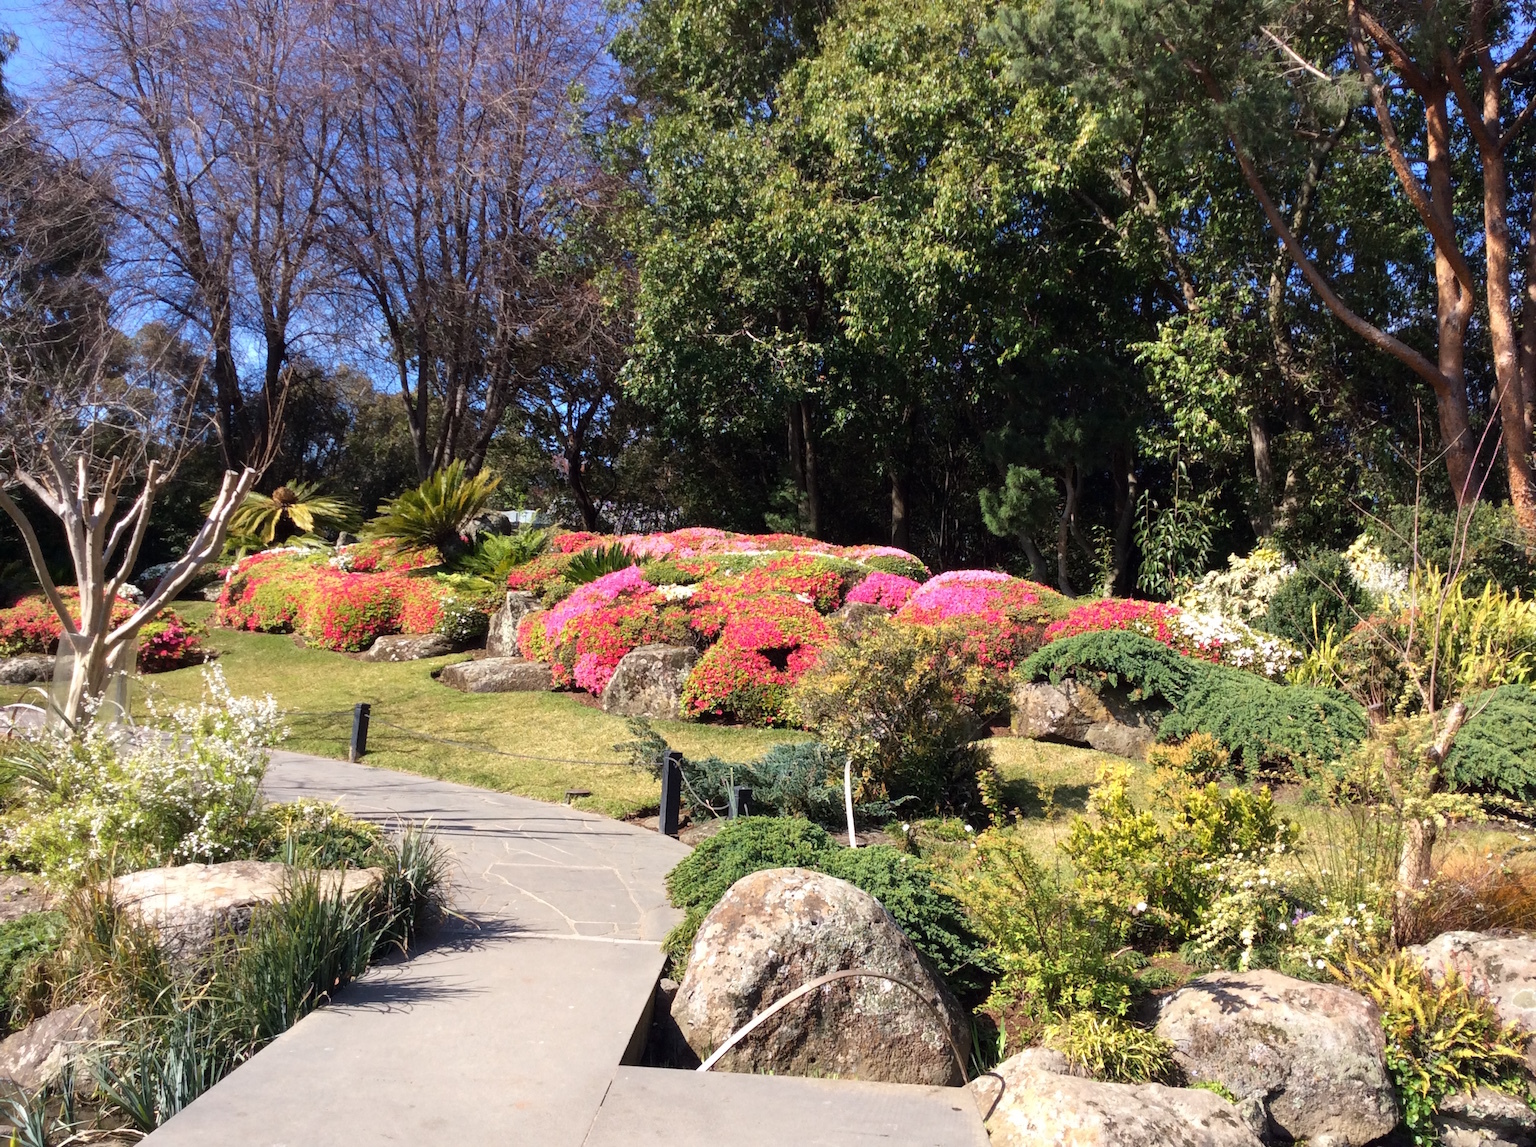 Japanese Garden at Melbourne Zoo